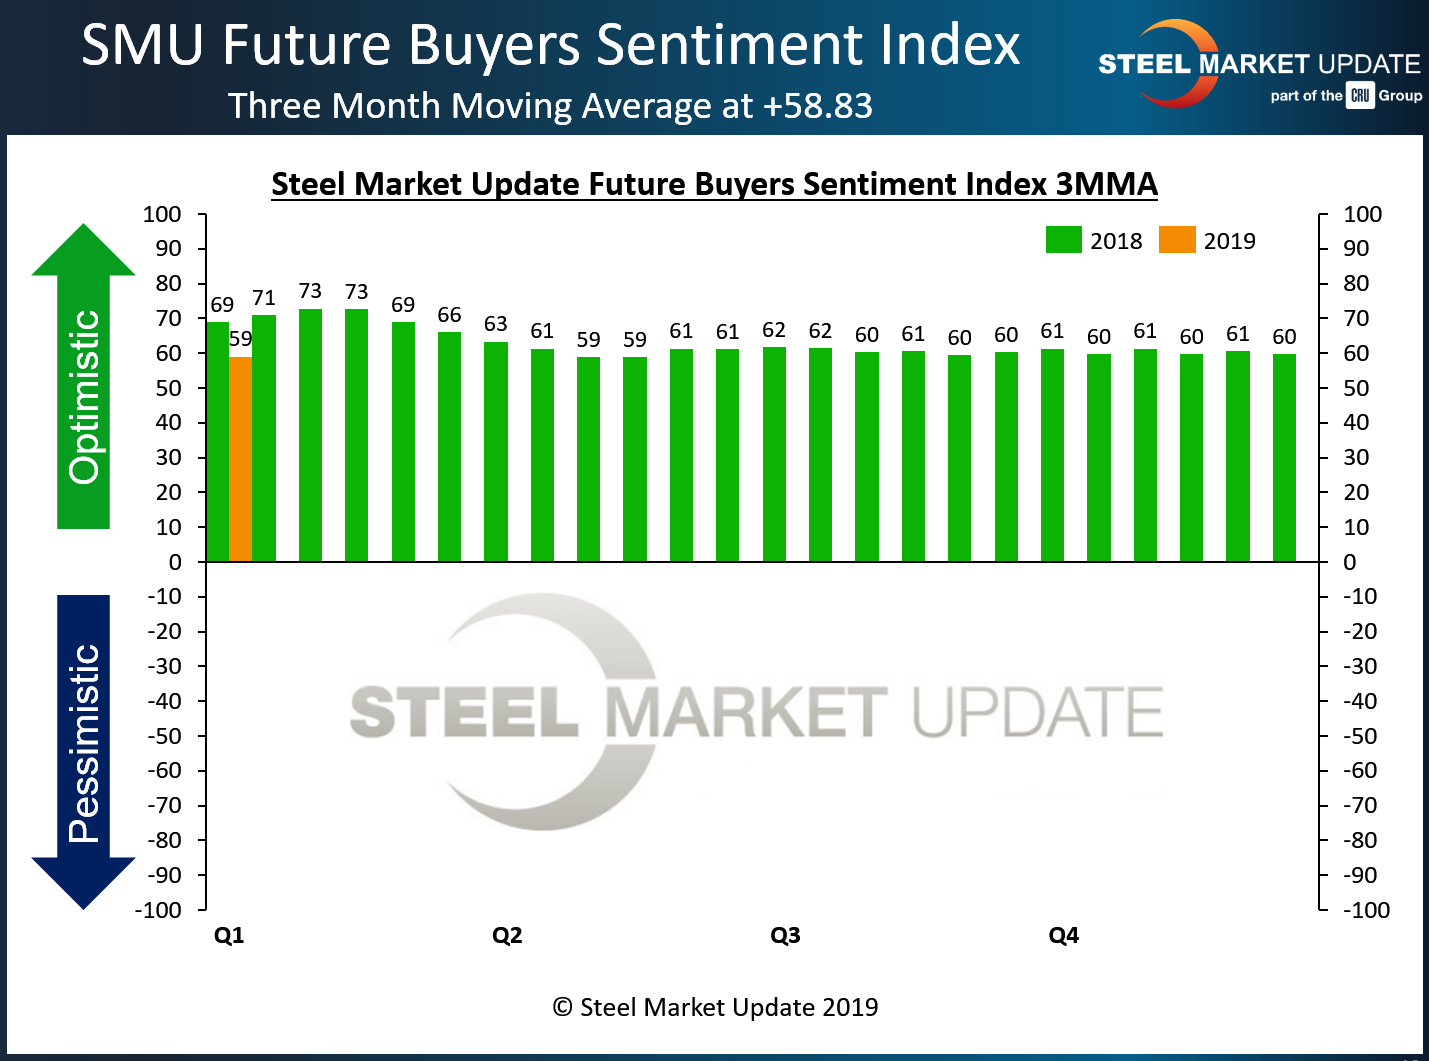 SMU Future Steel Buyers Sentiment Index